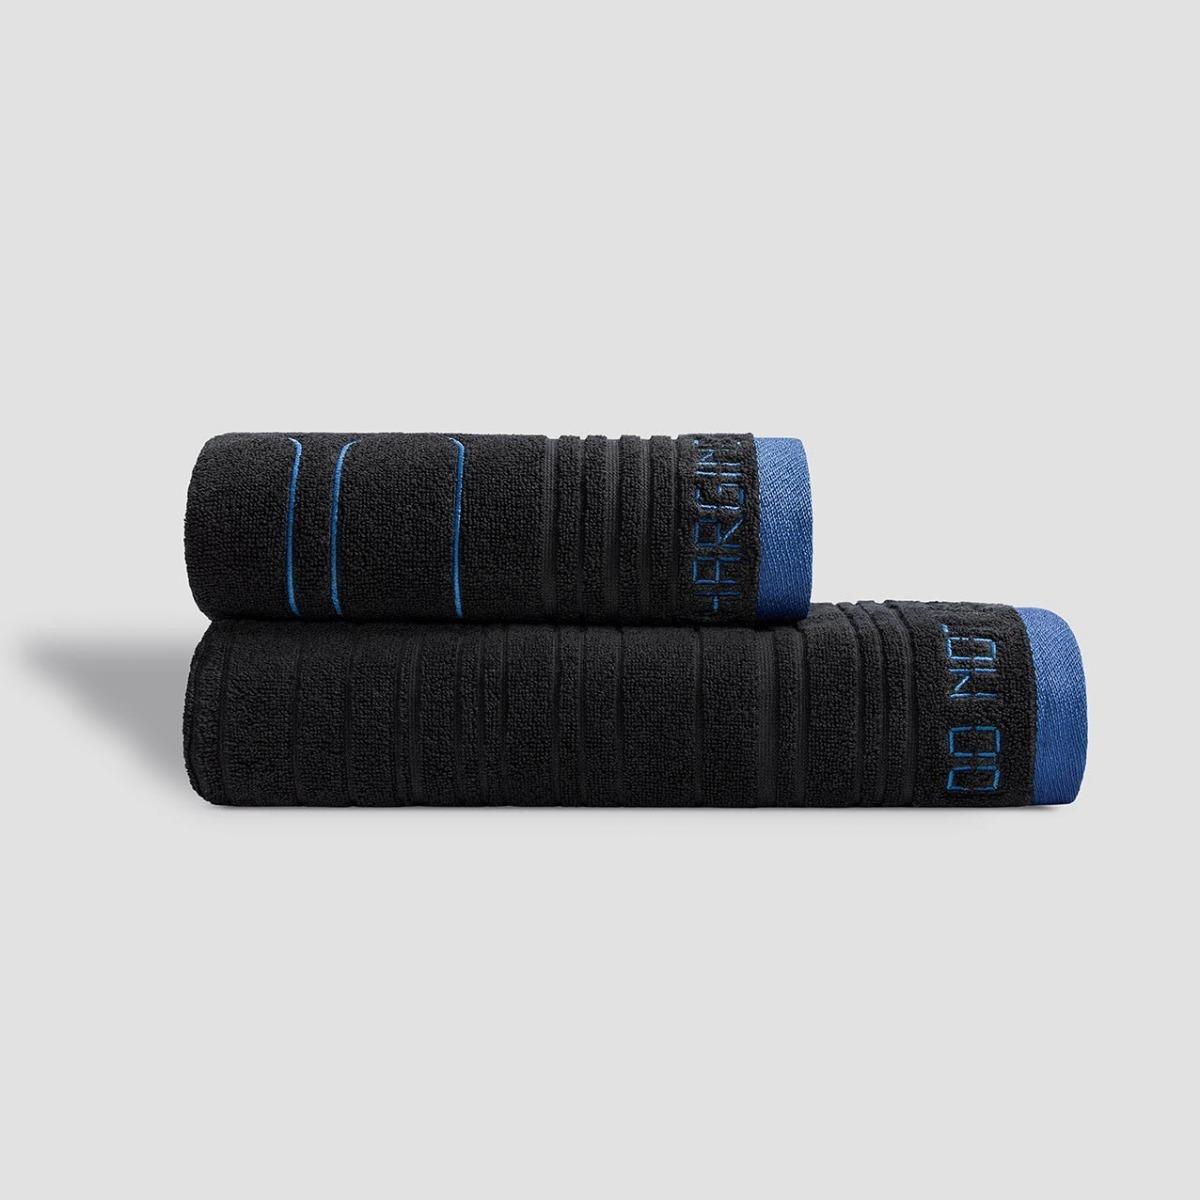 Полотенце Togas Макс чёрное с синим 50х100 см полотенце аркадия экру 50х100 600г м2 10 00 01 1078